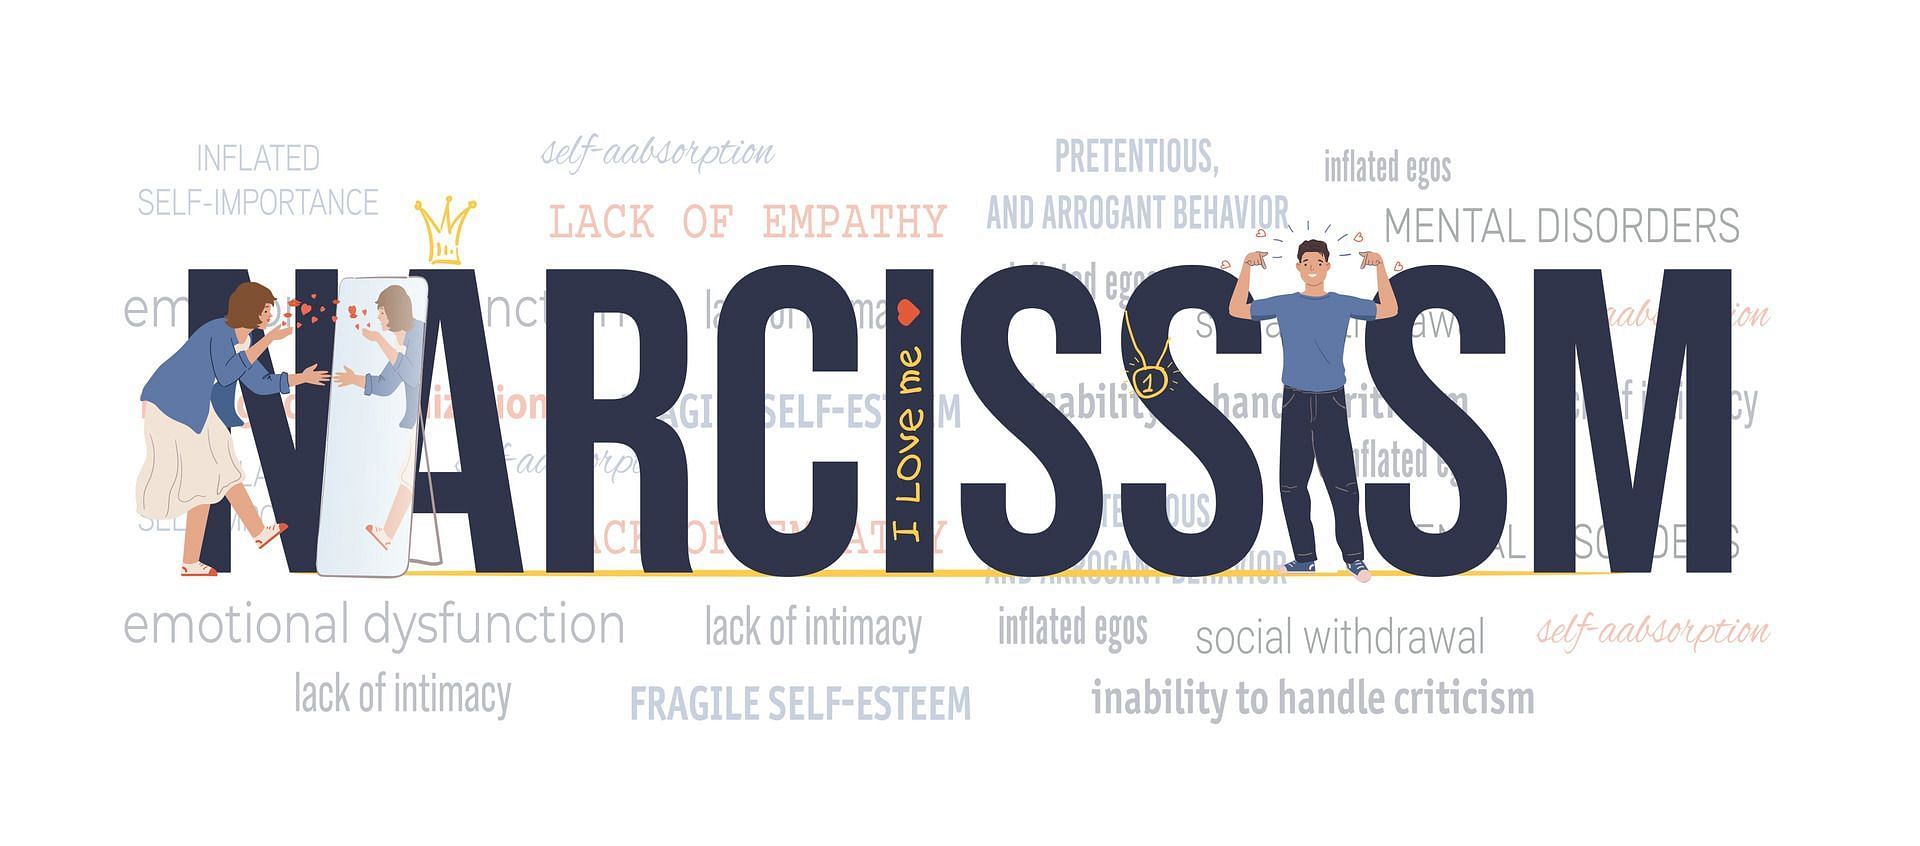 Narcissism can affect your emotional landscape. (Image via Vecteezy/ Macrovector studio)